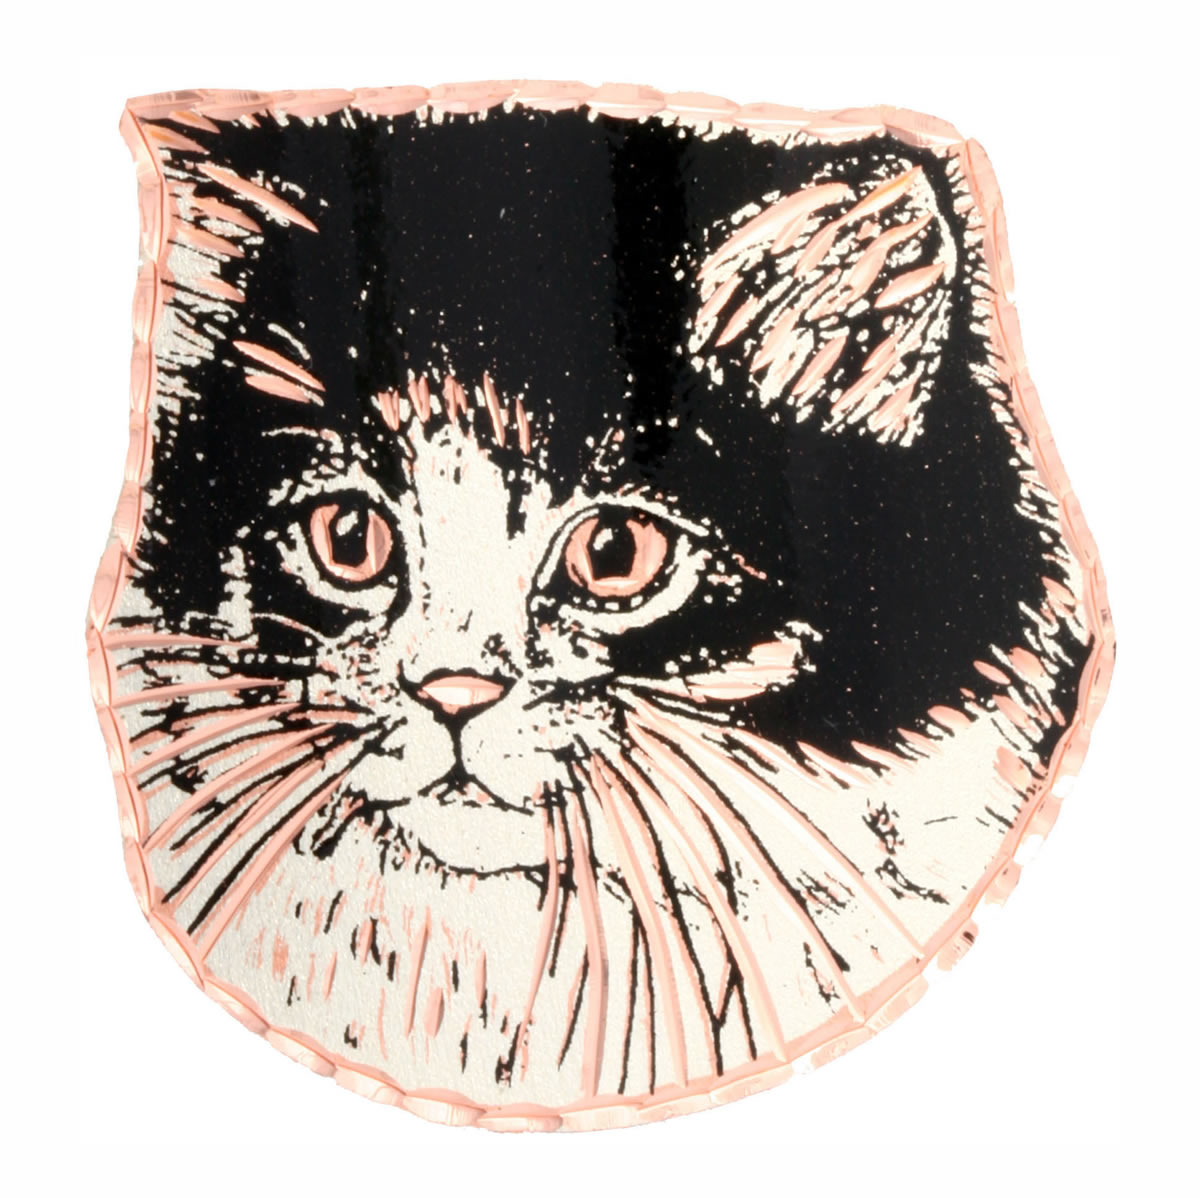 Cat Brooches Handmade in Cute Kitten Design